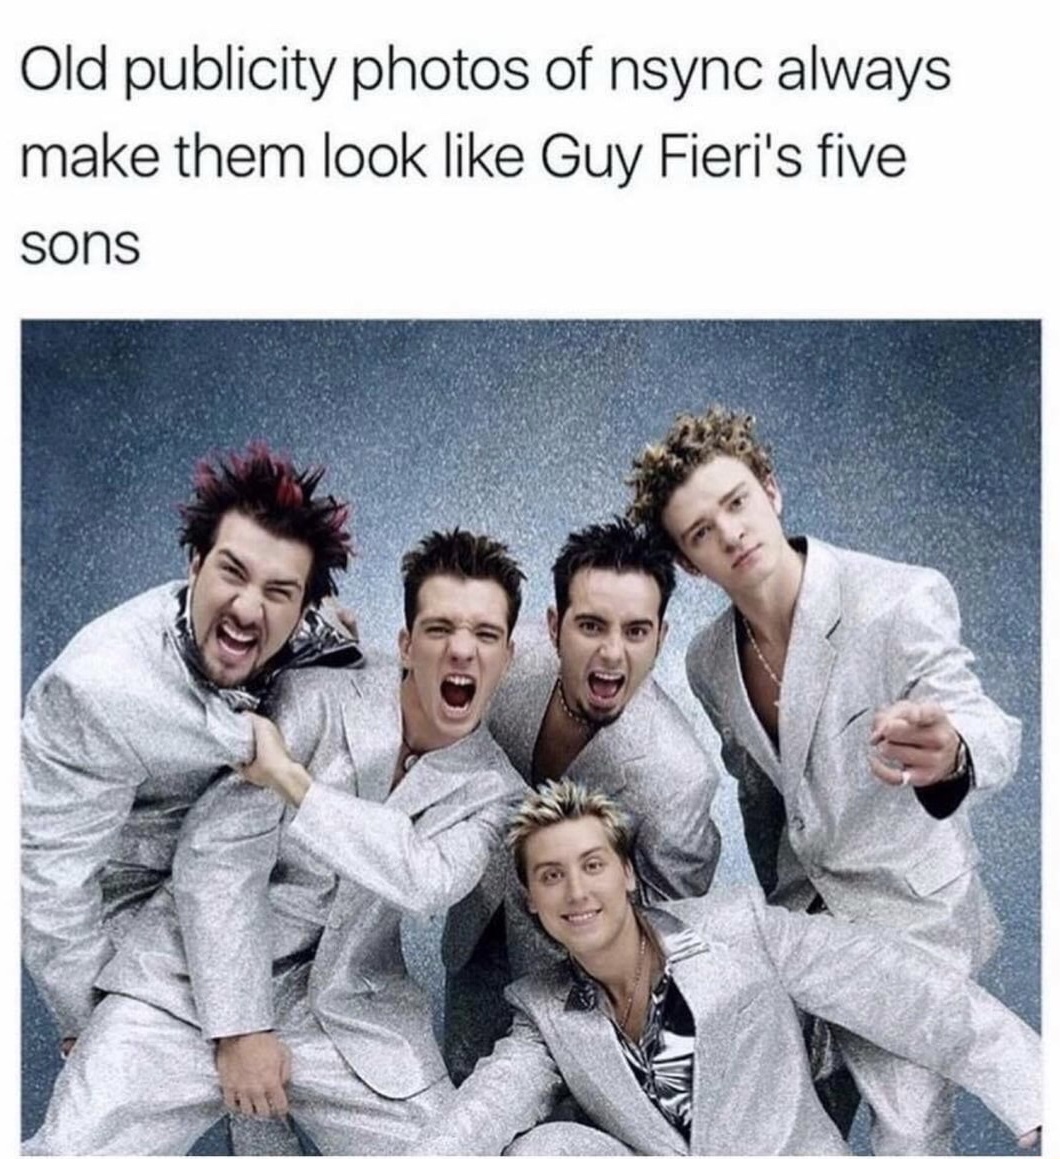 memes - guy fieri memes - Old publicity photos of nsync always make them look Guy Fieri's five sons